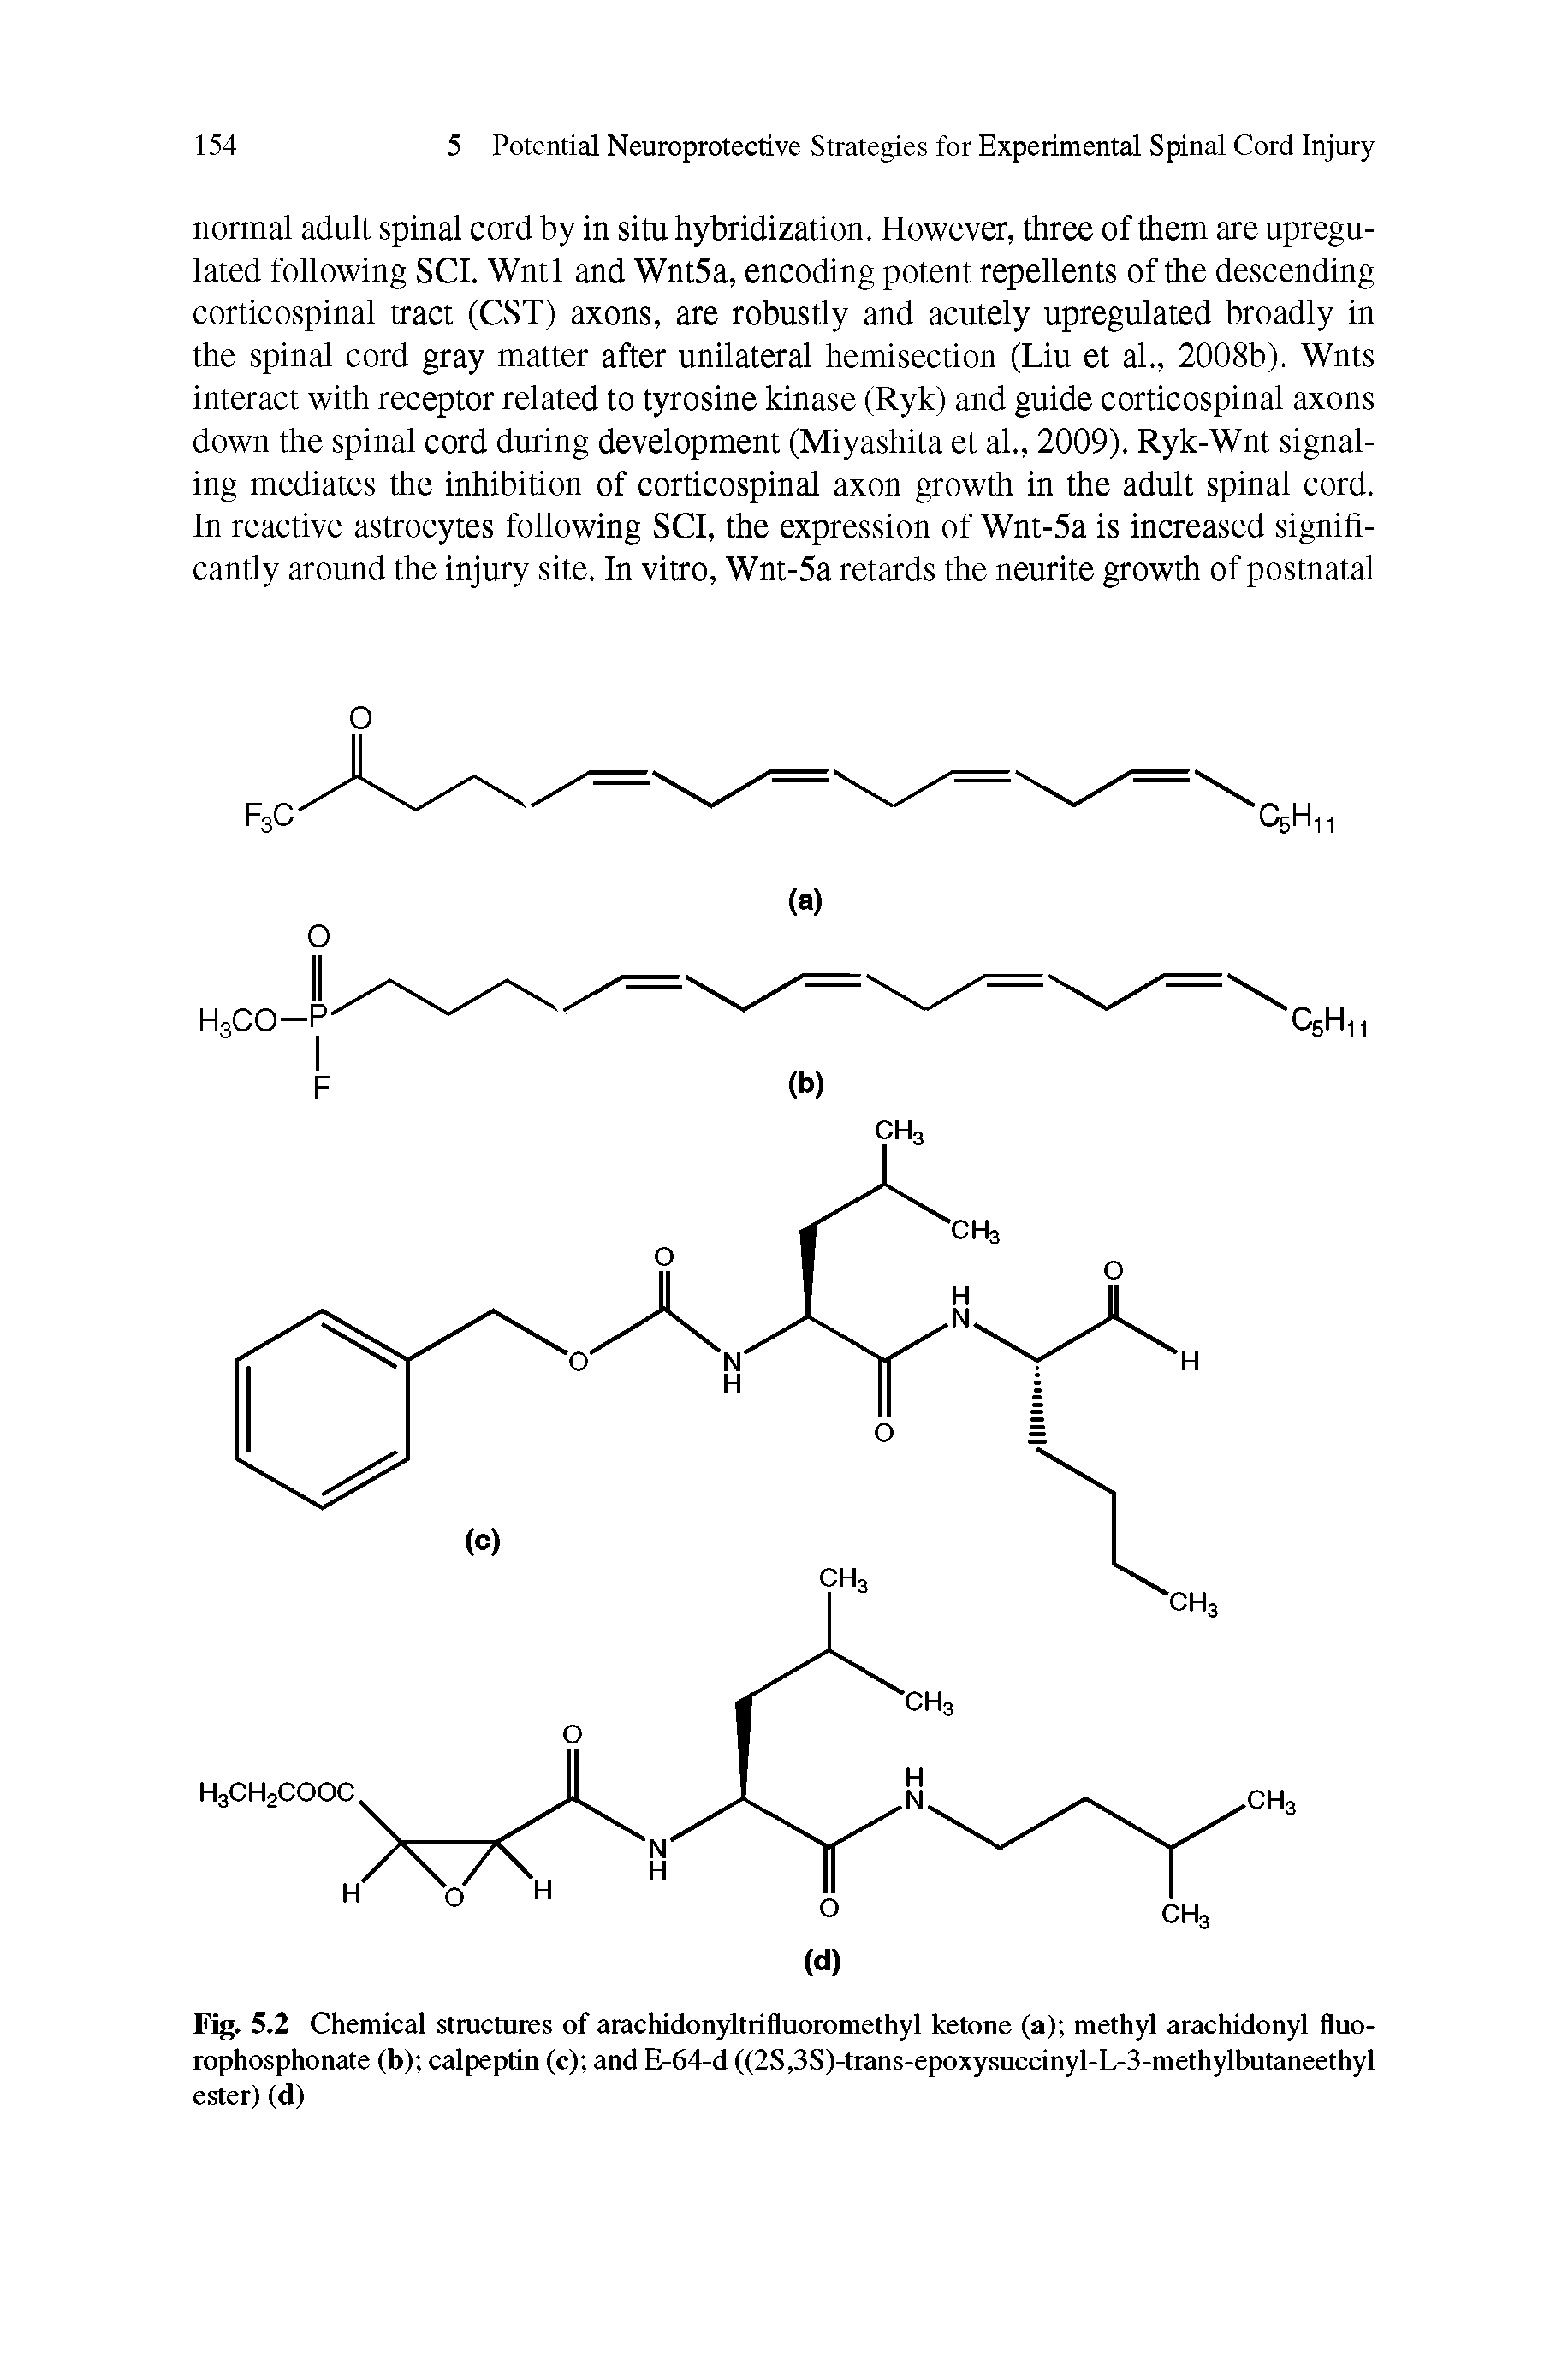 Fig. 5.2 Chemical structures of arachidonyltrifluoromethyl ketone (a) methyl arachidonyl fluo-rophosphonate (b) calpeptin (c) and E-64-d ((2S,3S)-trans-epoxysuccinyl-L-3-methylbutaneethyl ester) (d)...